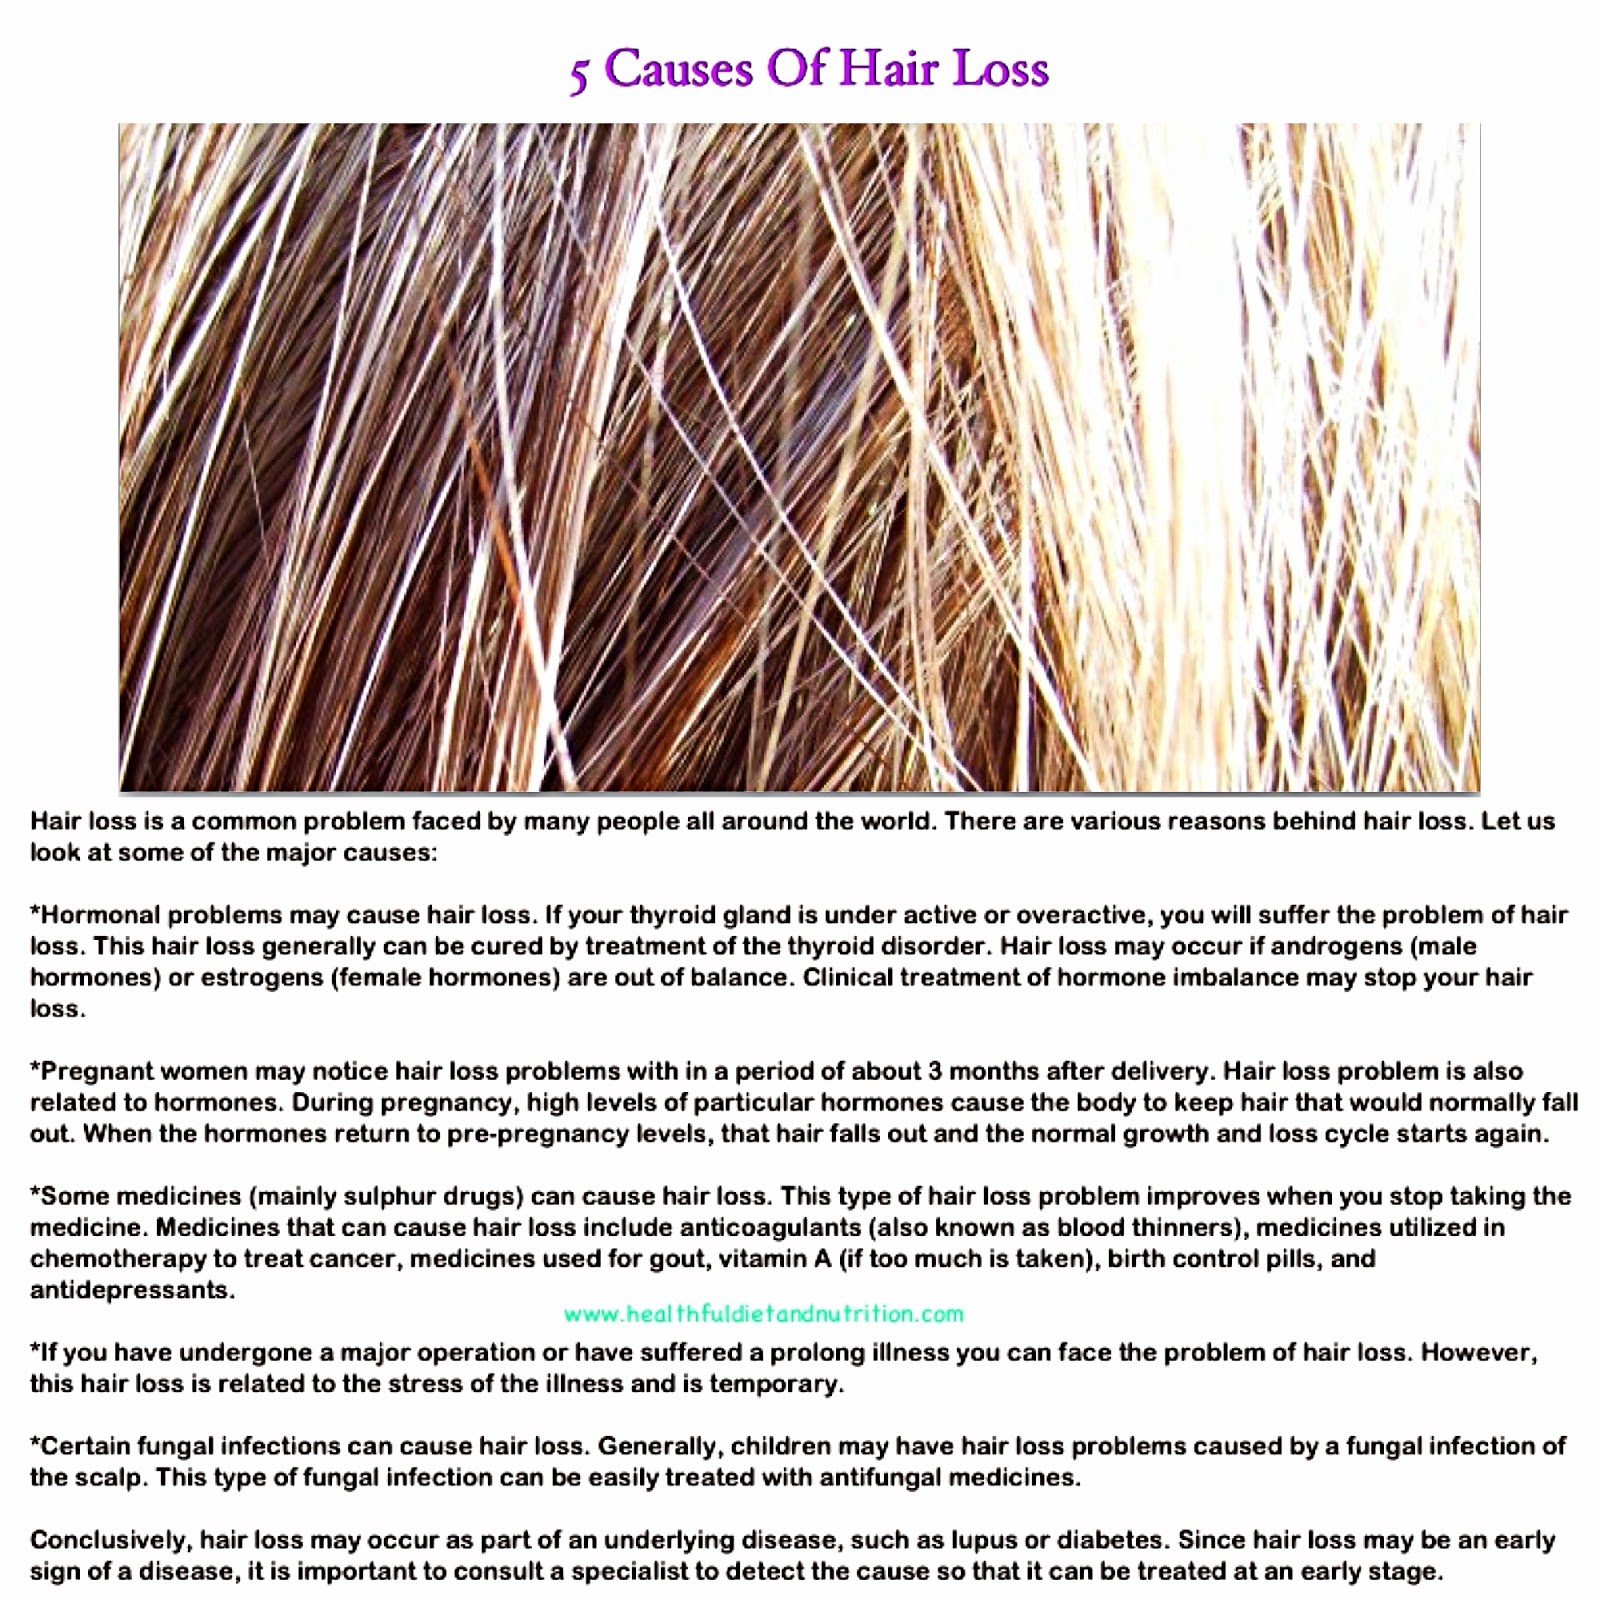 5 causes of hair loss